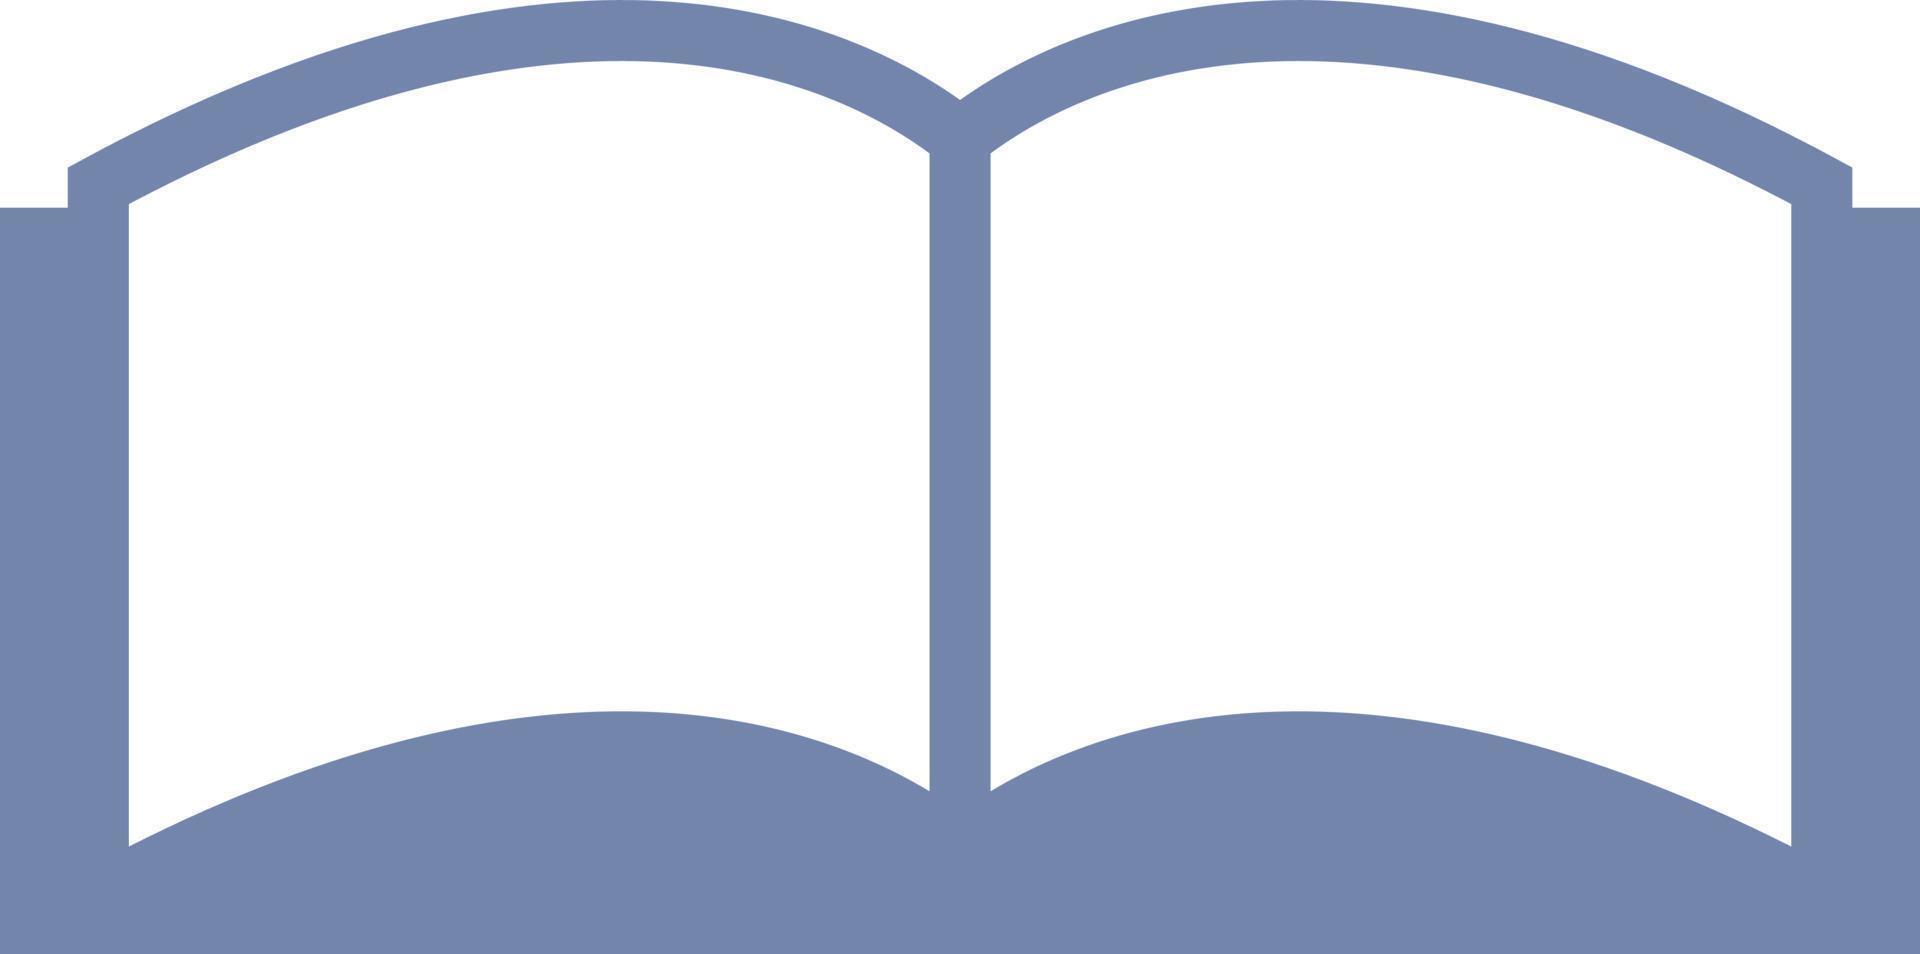 Book reading, illustration, vector on white background.